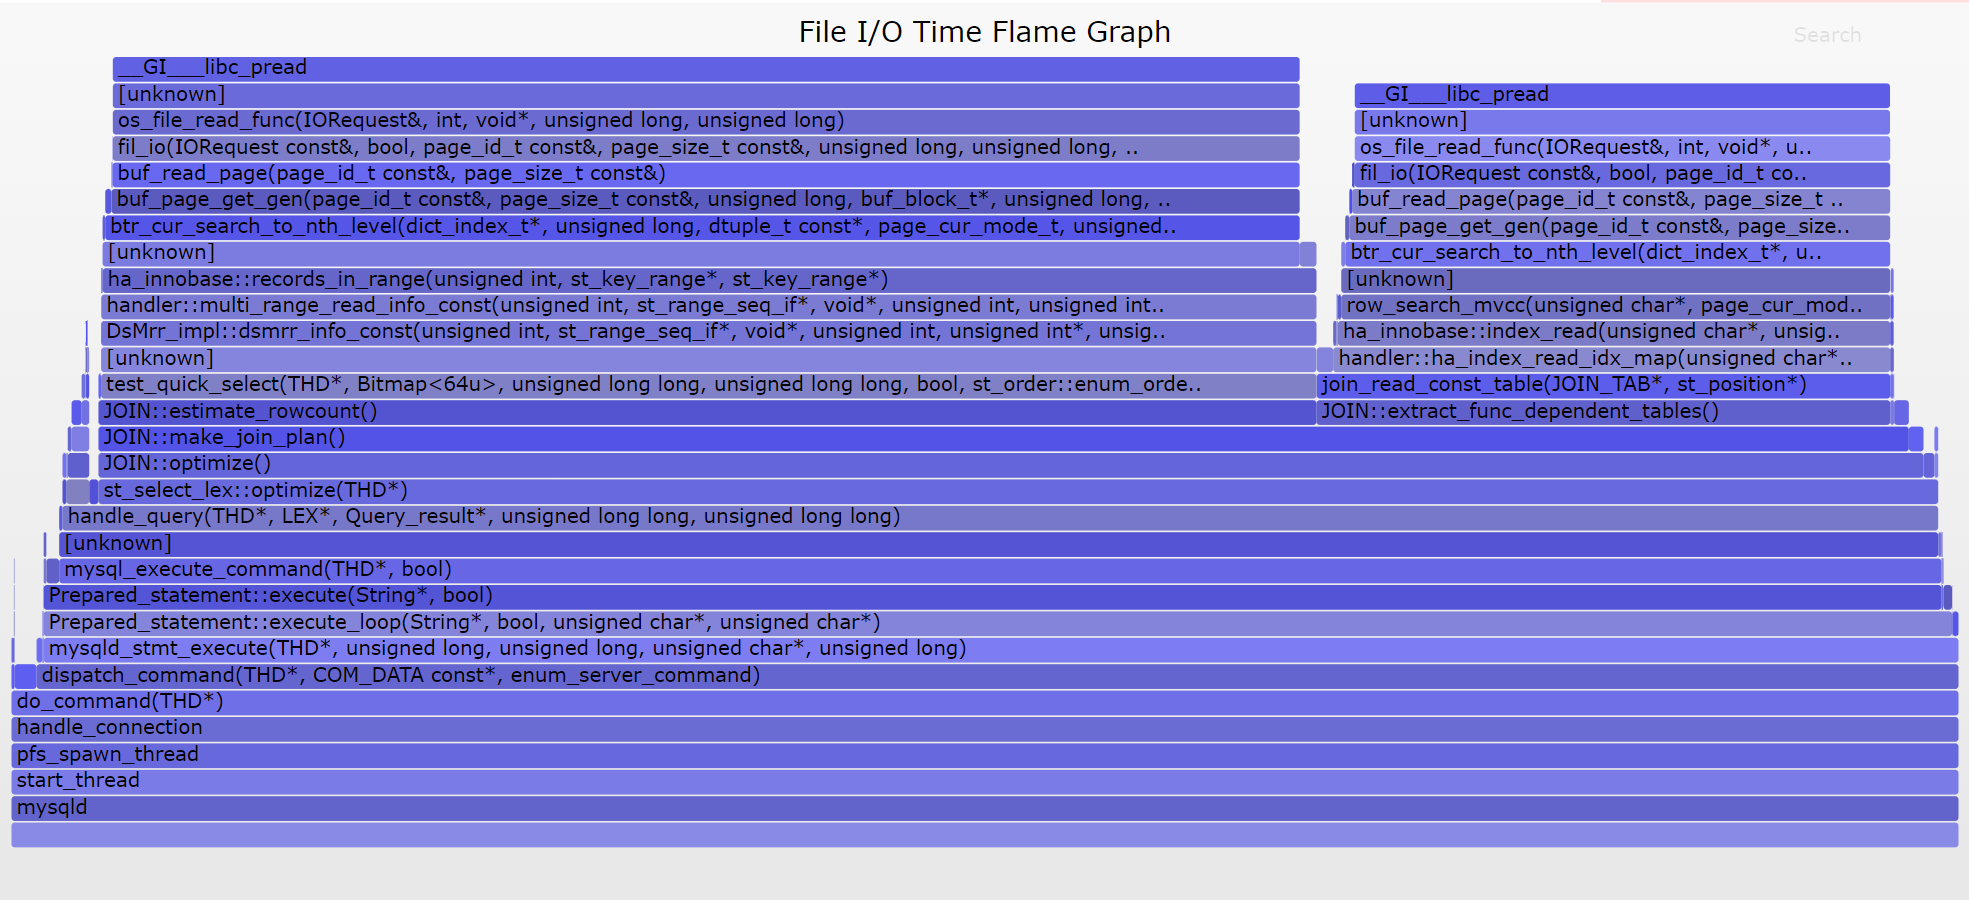 file io flame graphs - https://www.brendangregg.com/FlameGraphs/offcpuflamegraphs.html